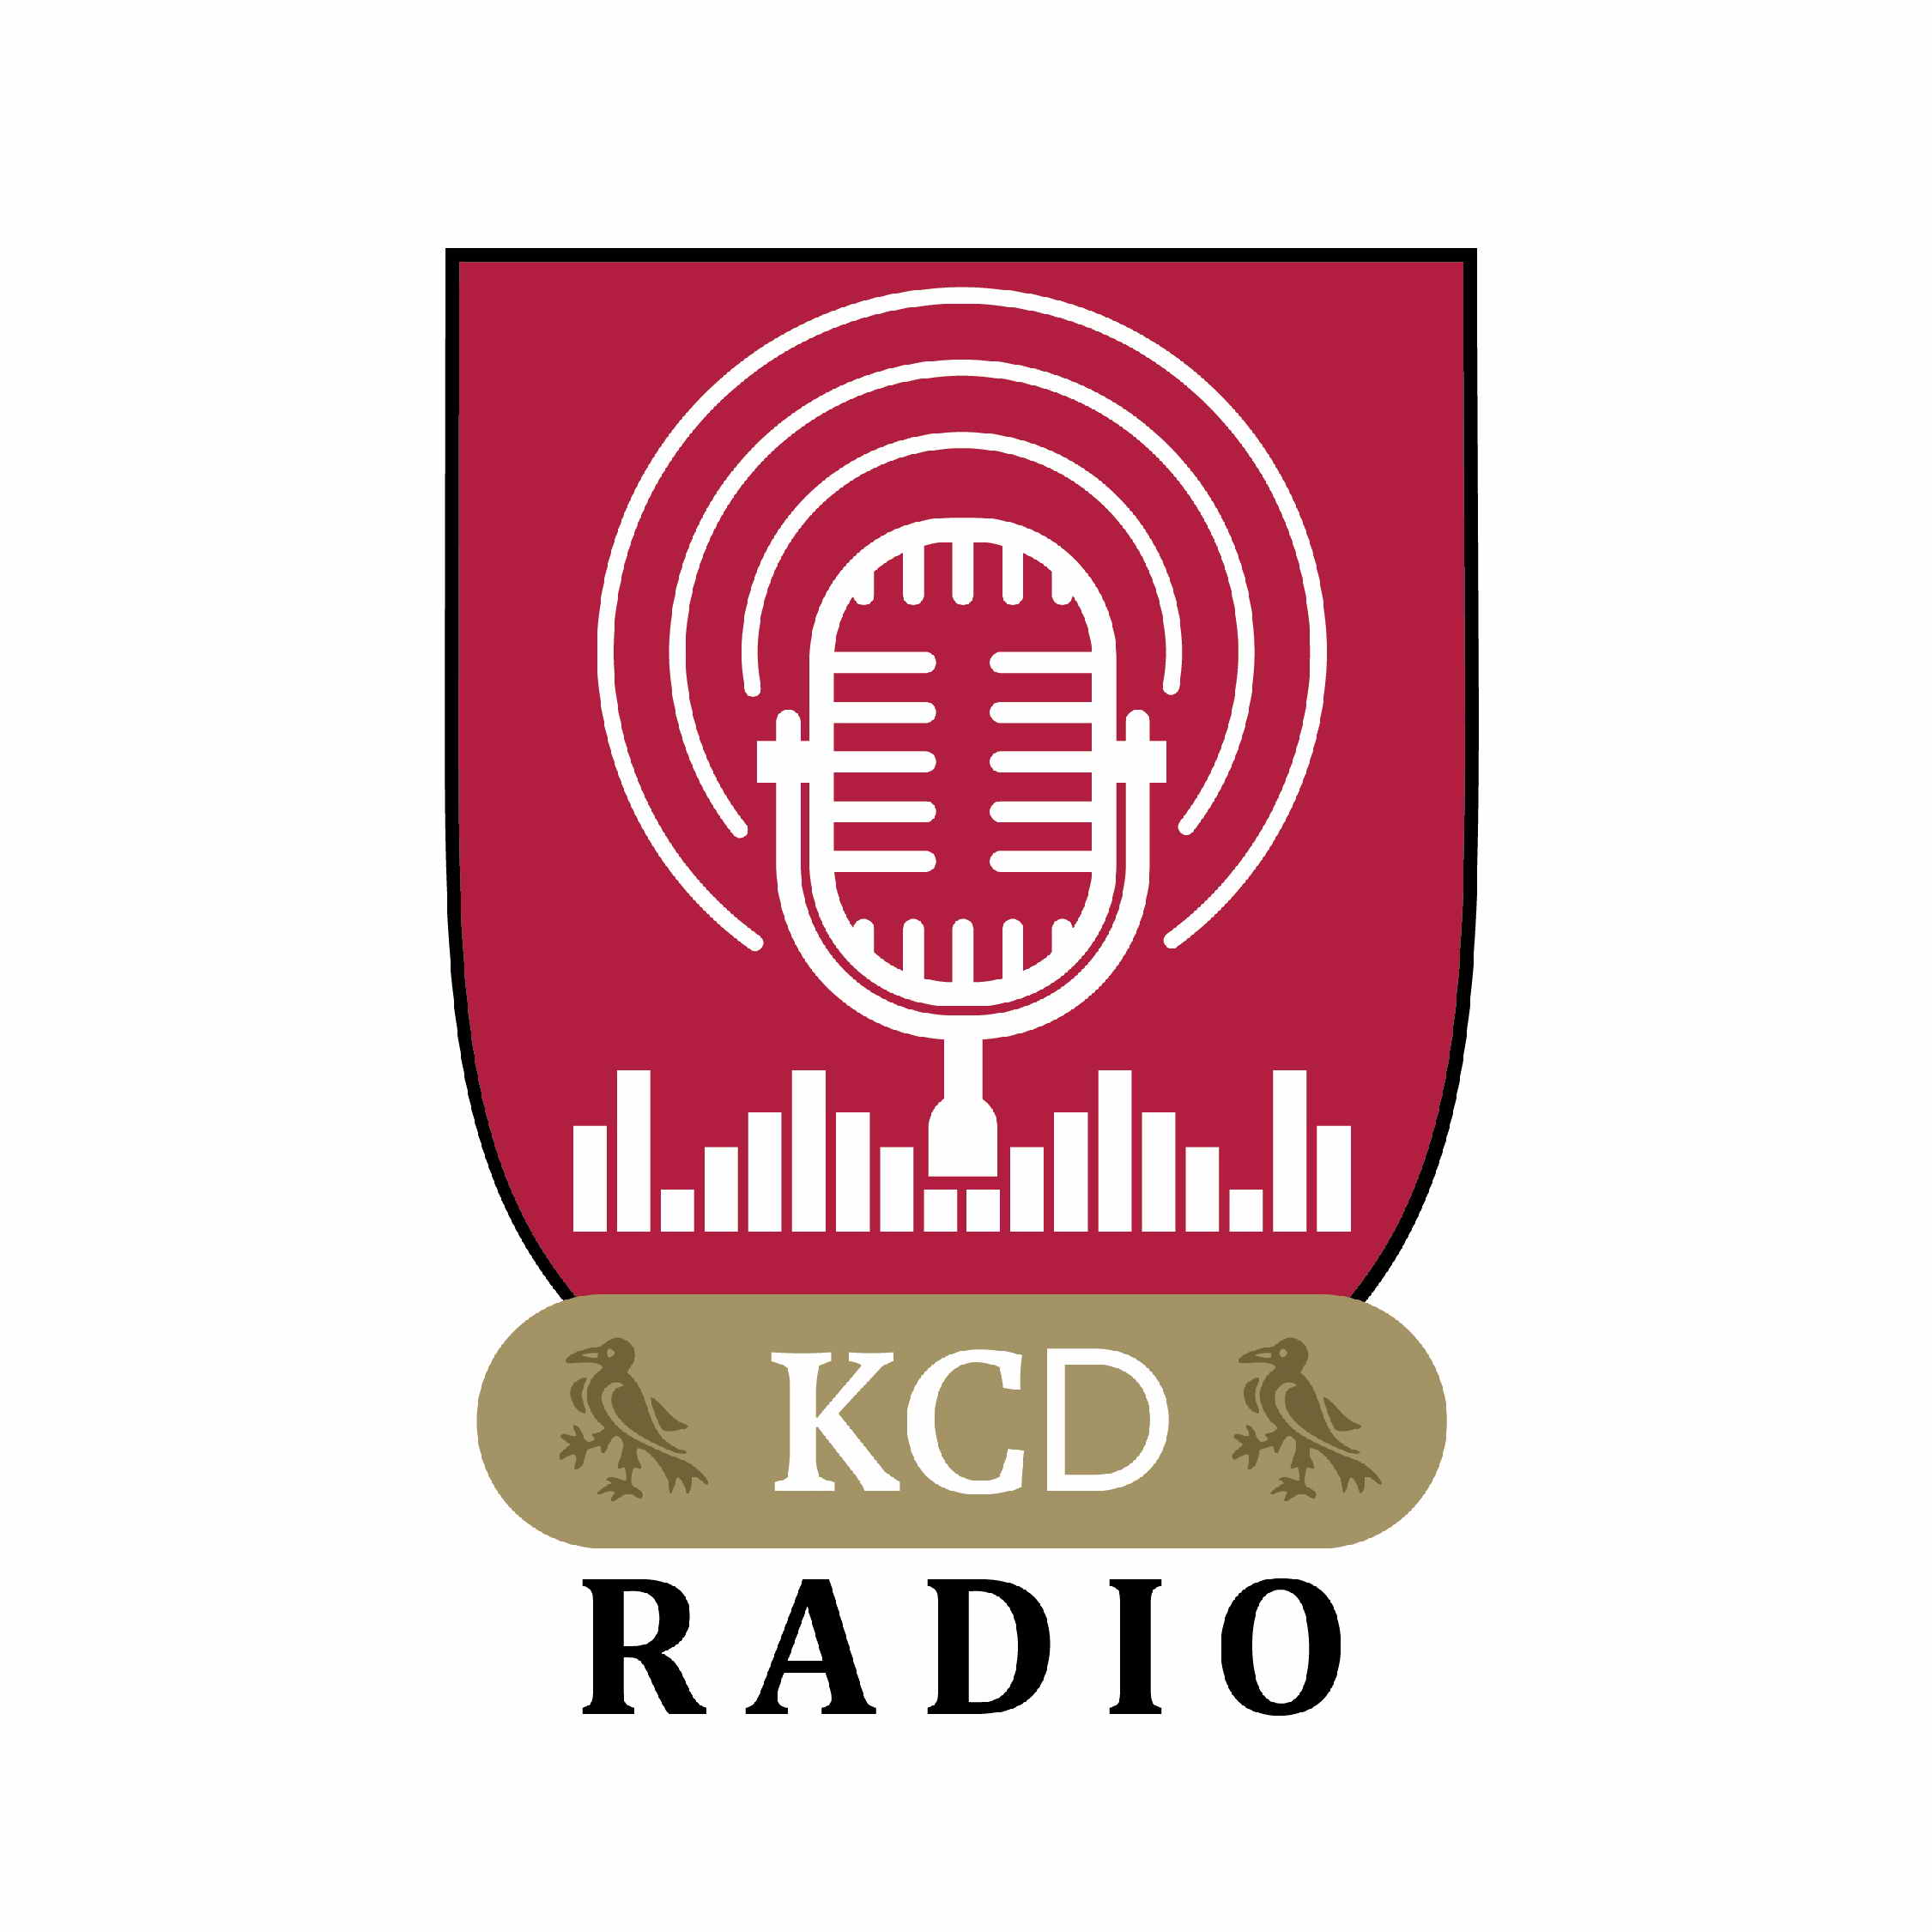 KCD radio logo design